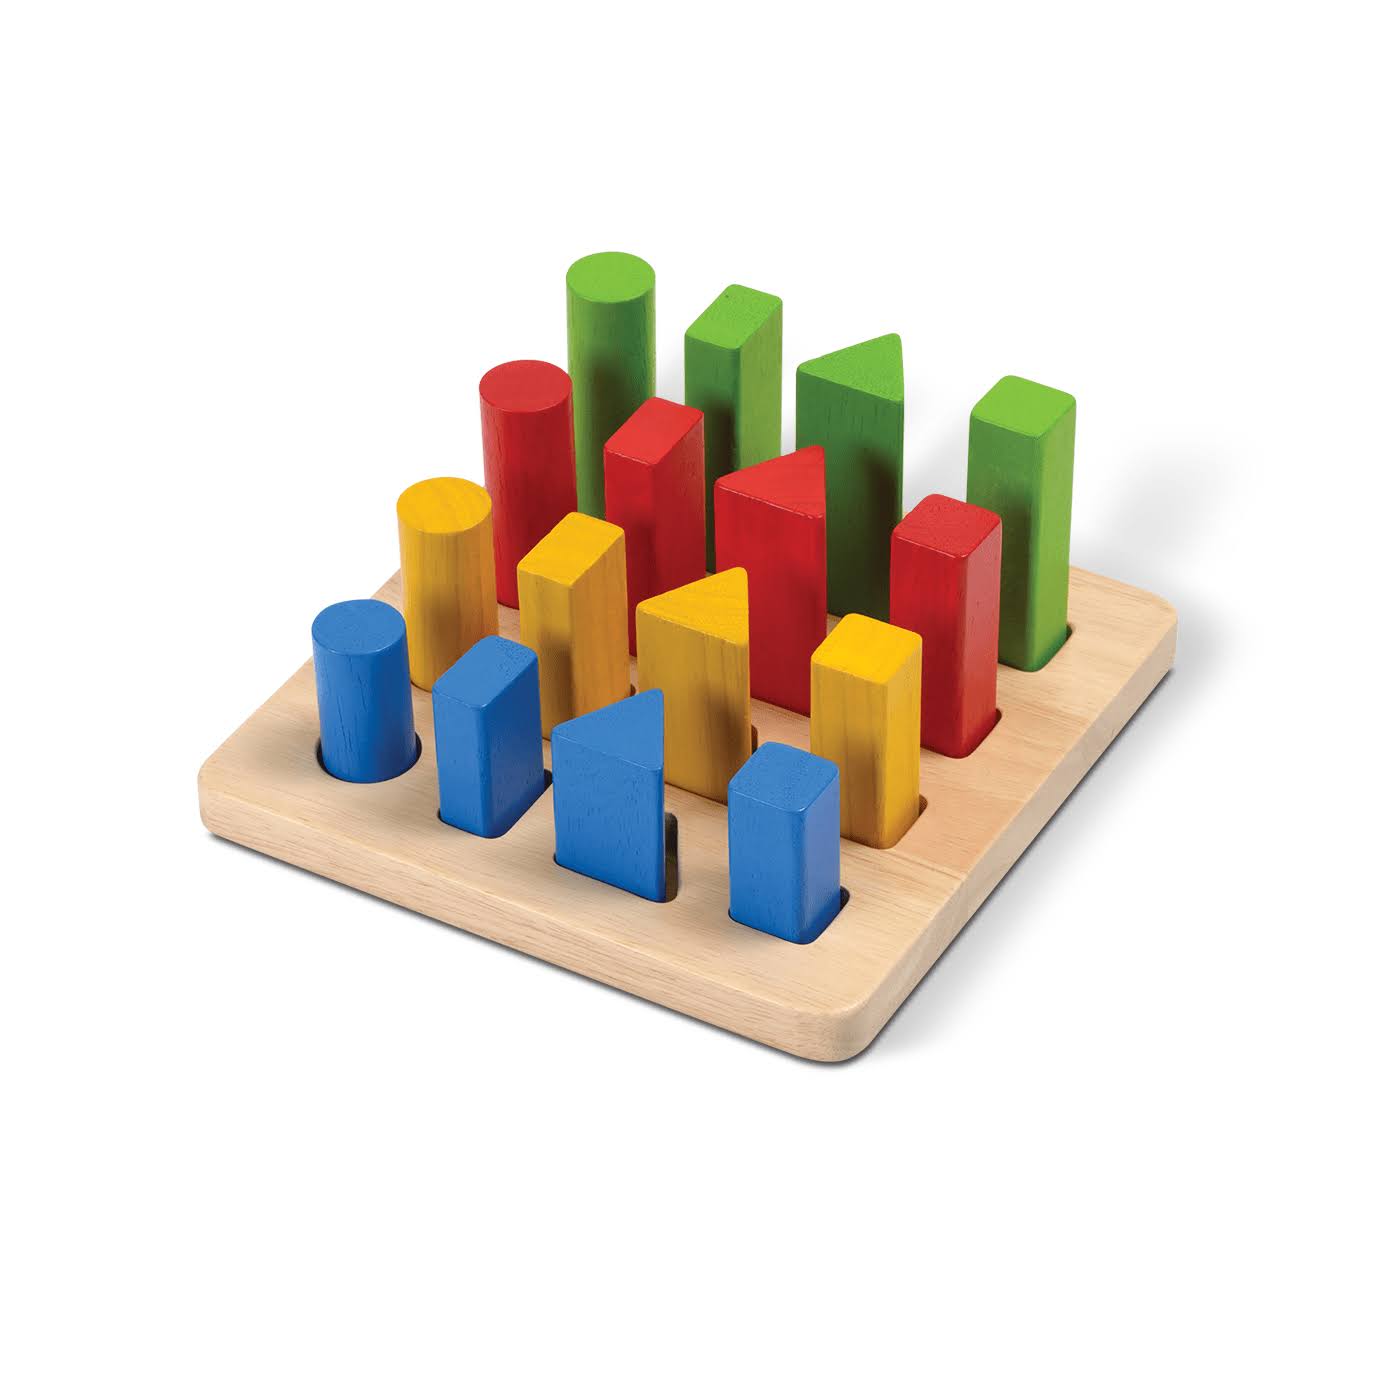 Plan Toys 5125 Wooden Toy - Geometric Peg